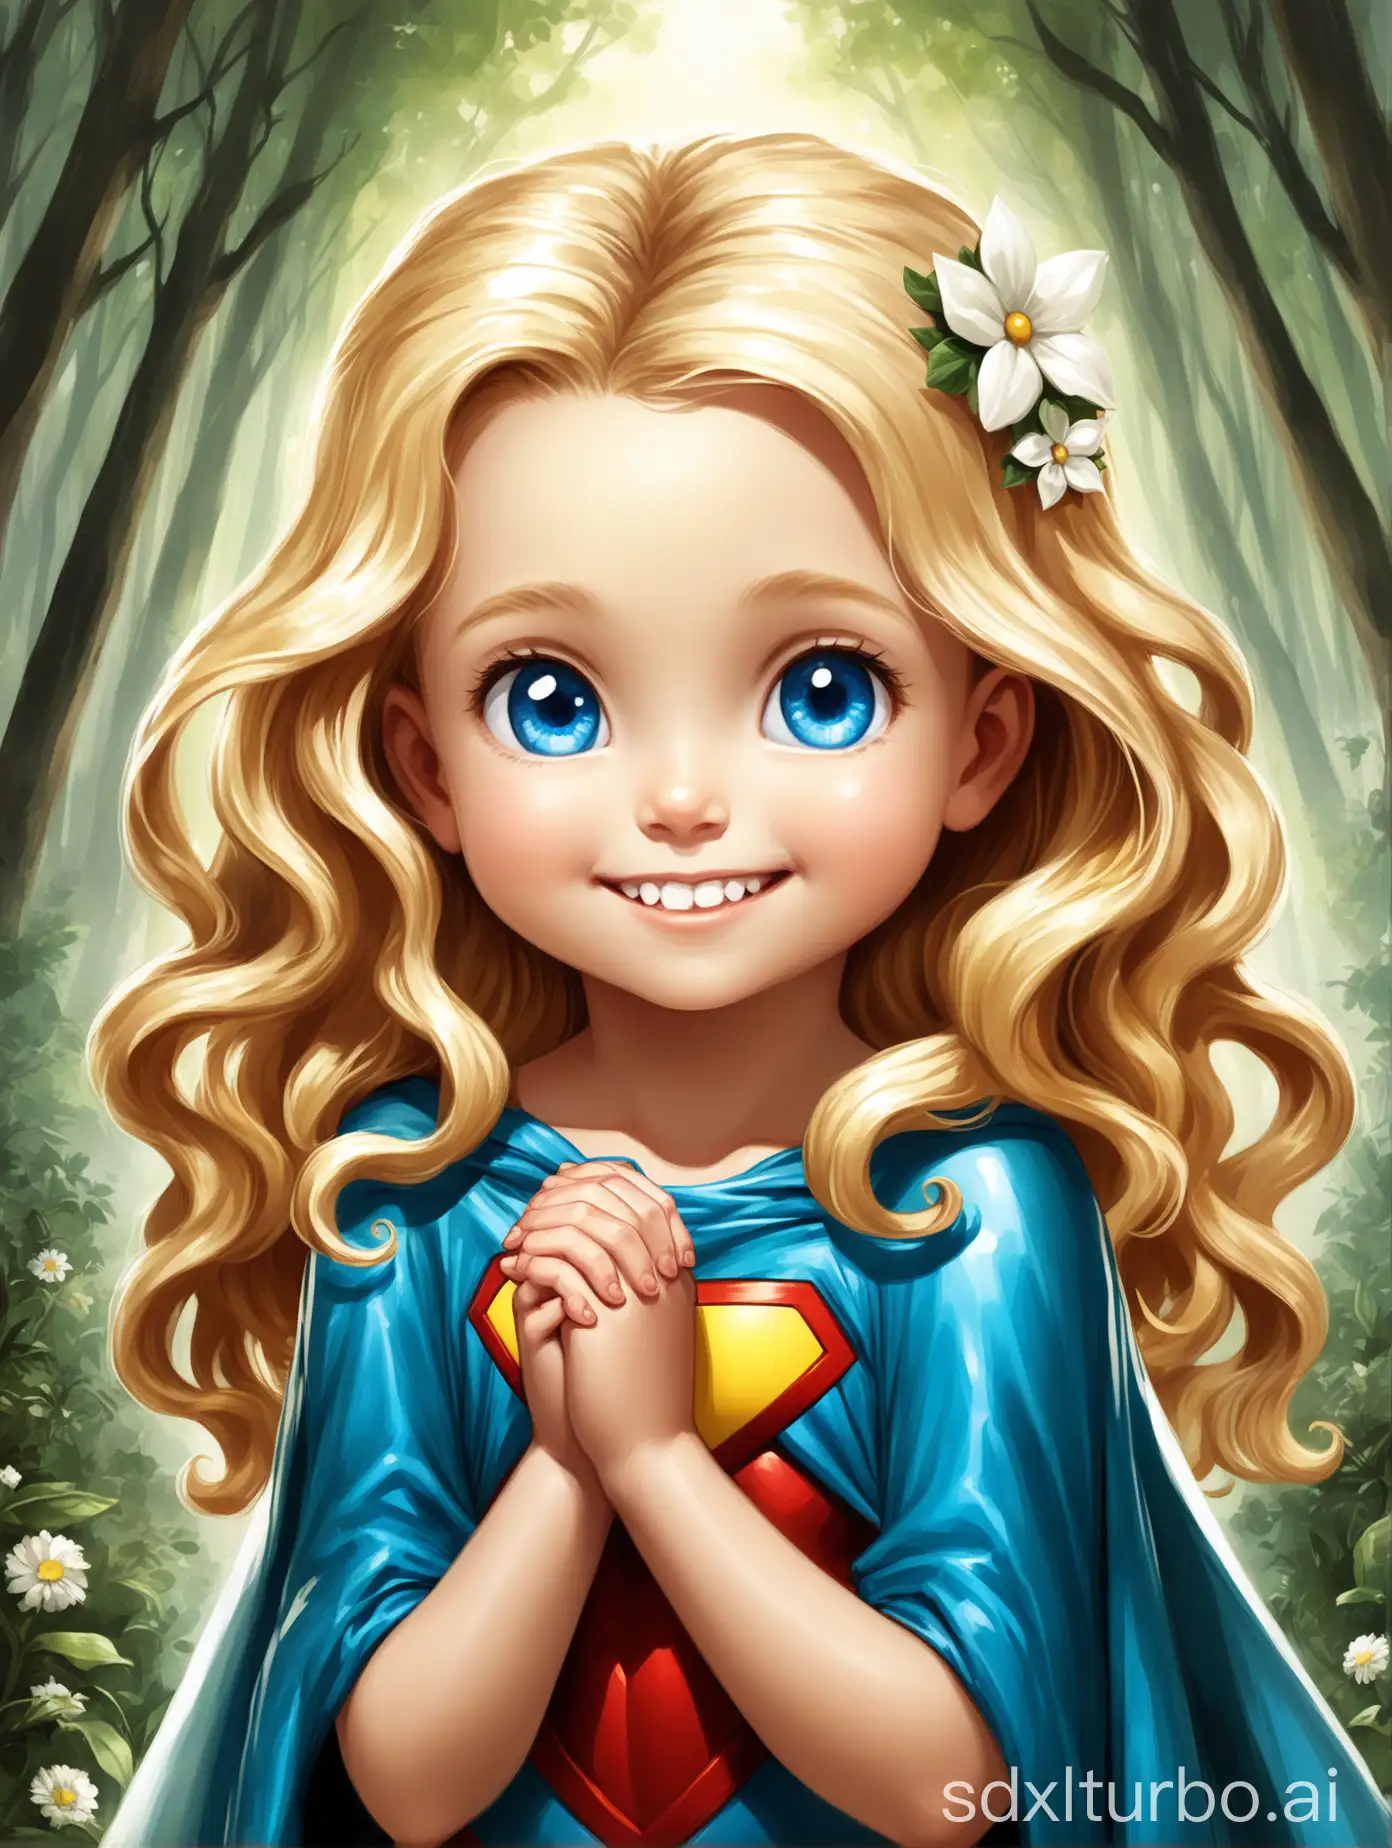 Joyful-Superhero-Emily-in-Enchanted-Forest